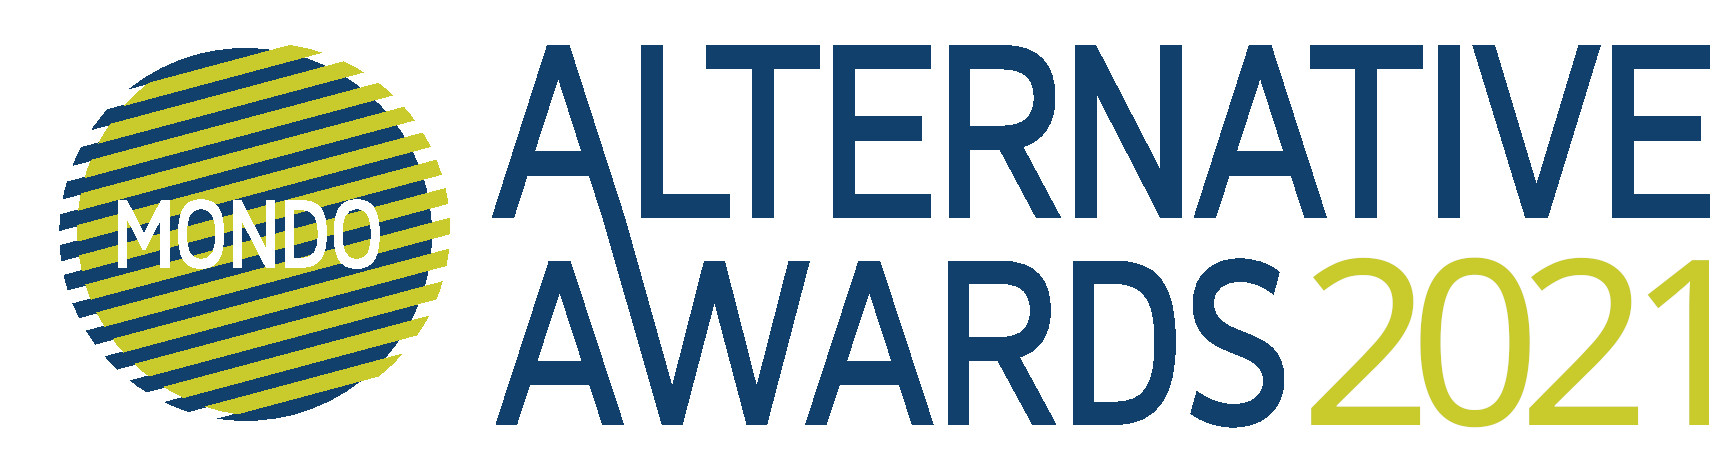 Mondo Alternative Awards 2021 logo